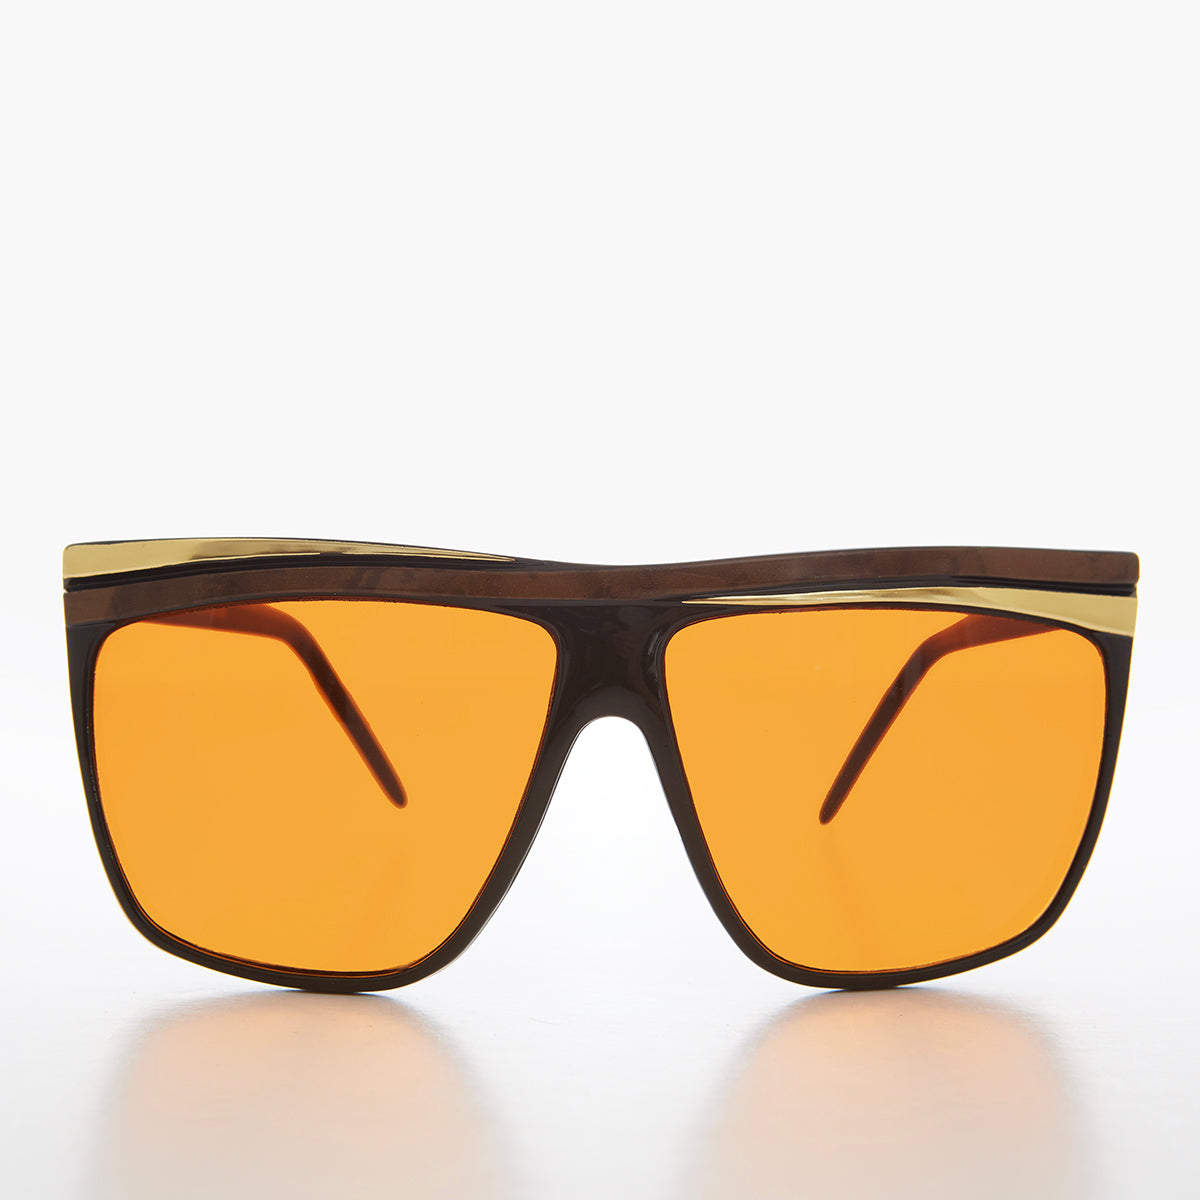 Women's 80s Large Sunglasses with Orange Lenses